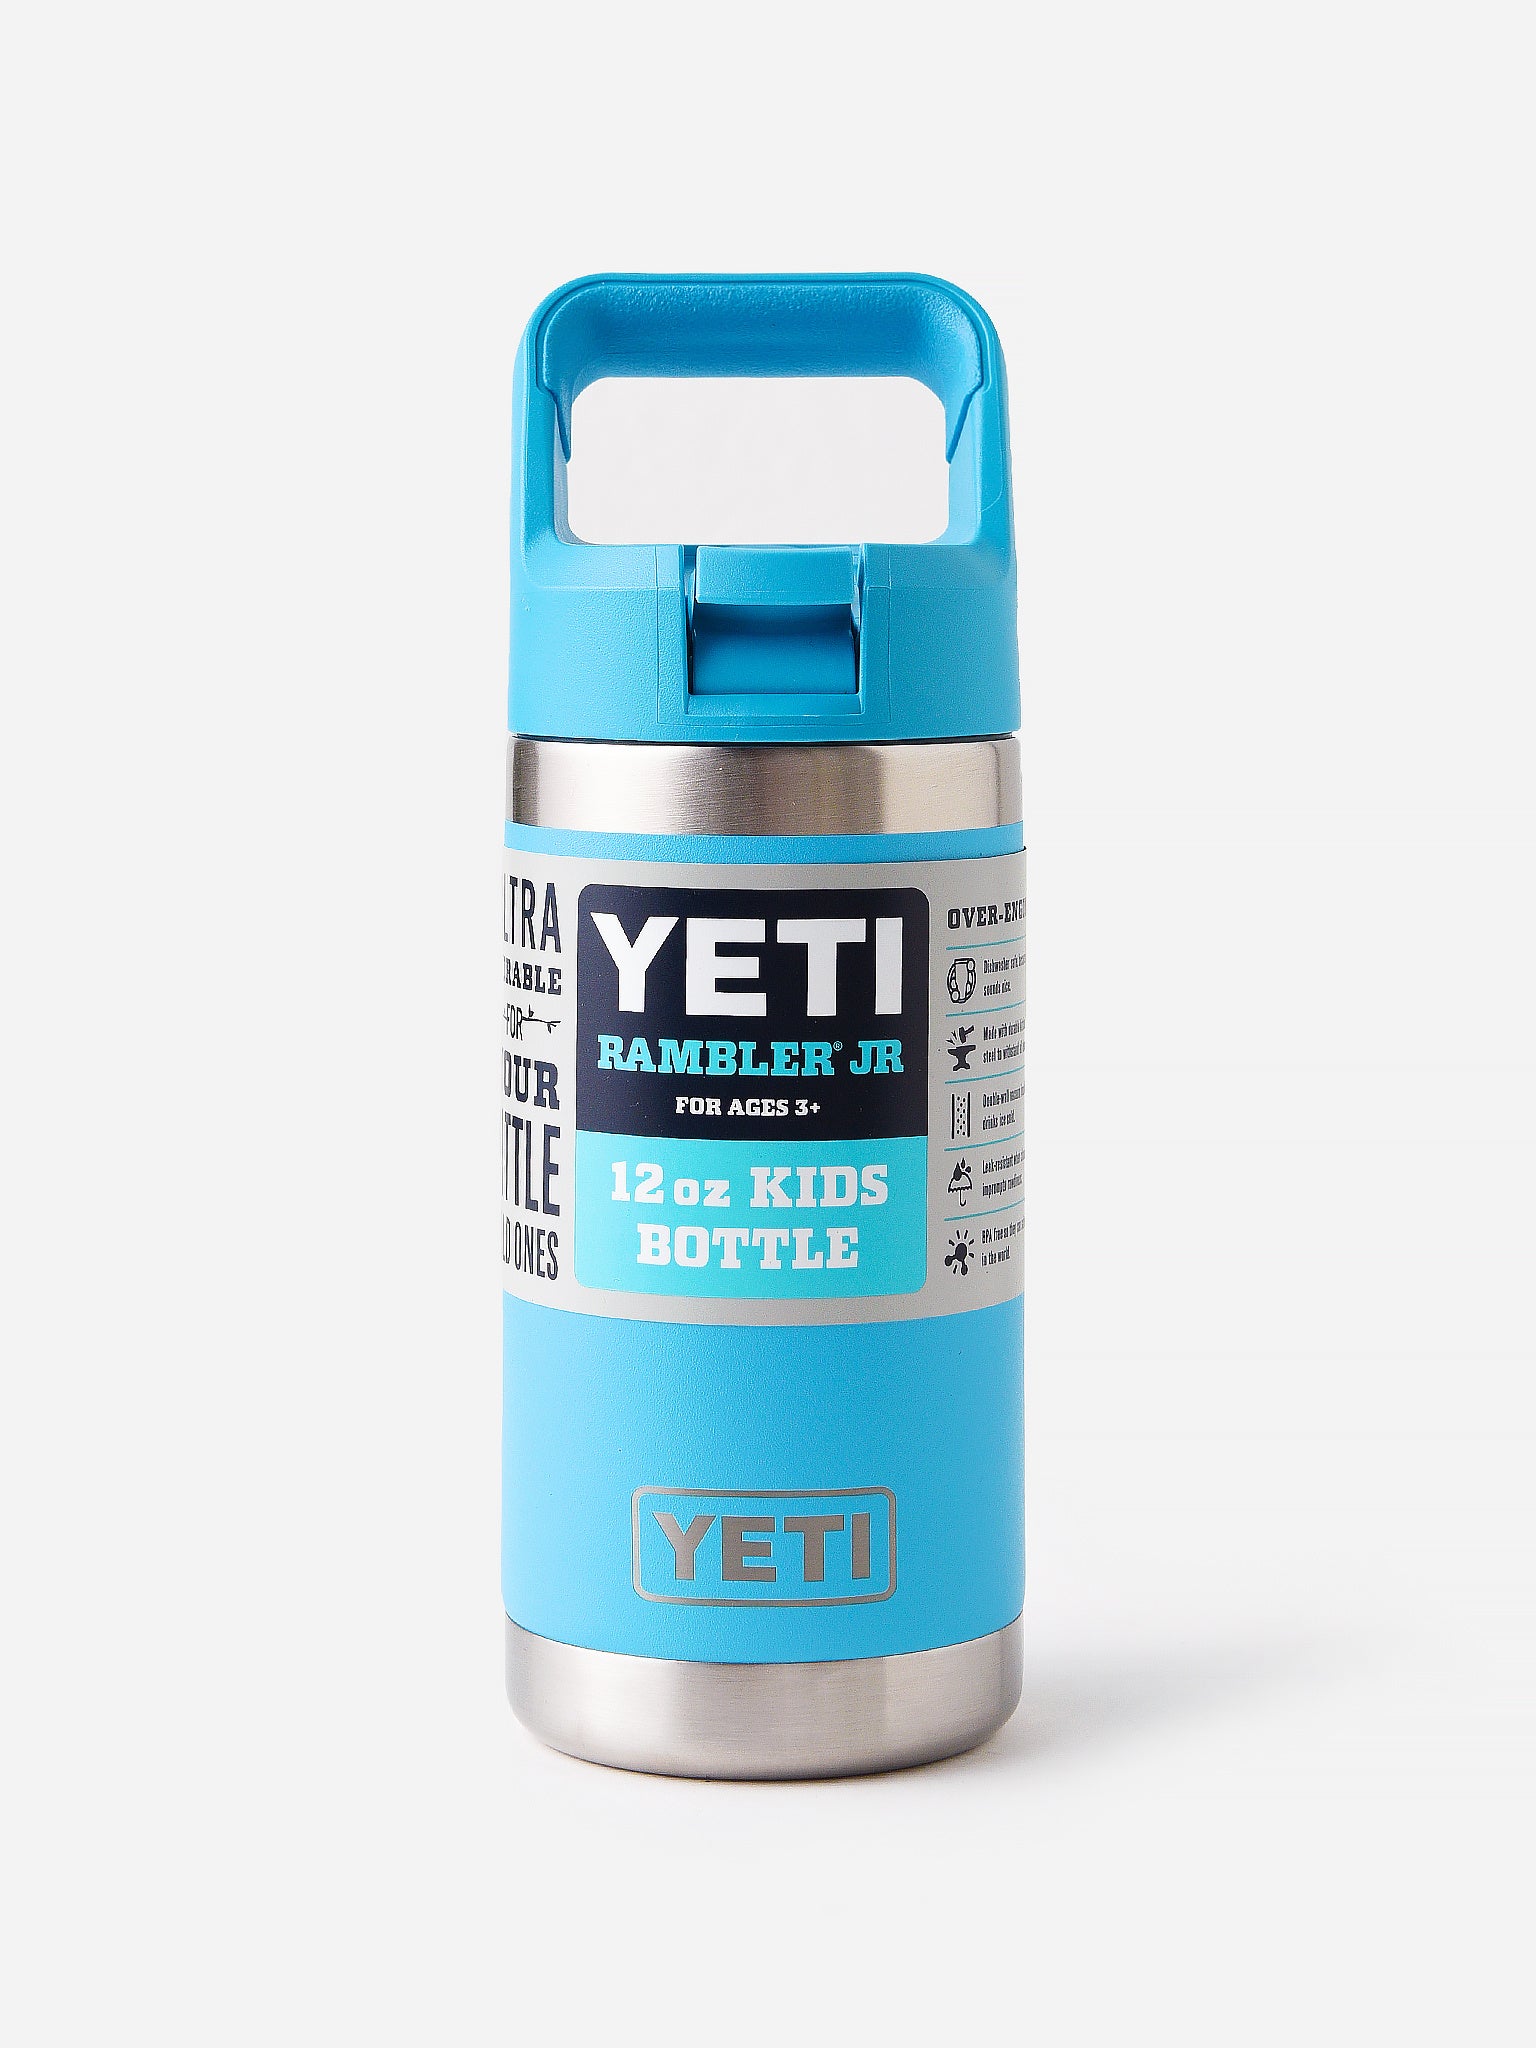 YETI Rambler JR. 12 oz Kids Bottle - Reef Blue